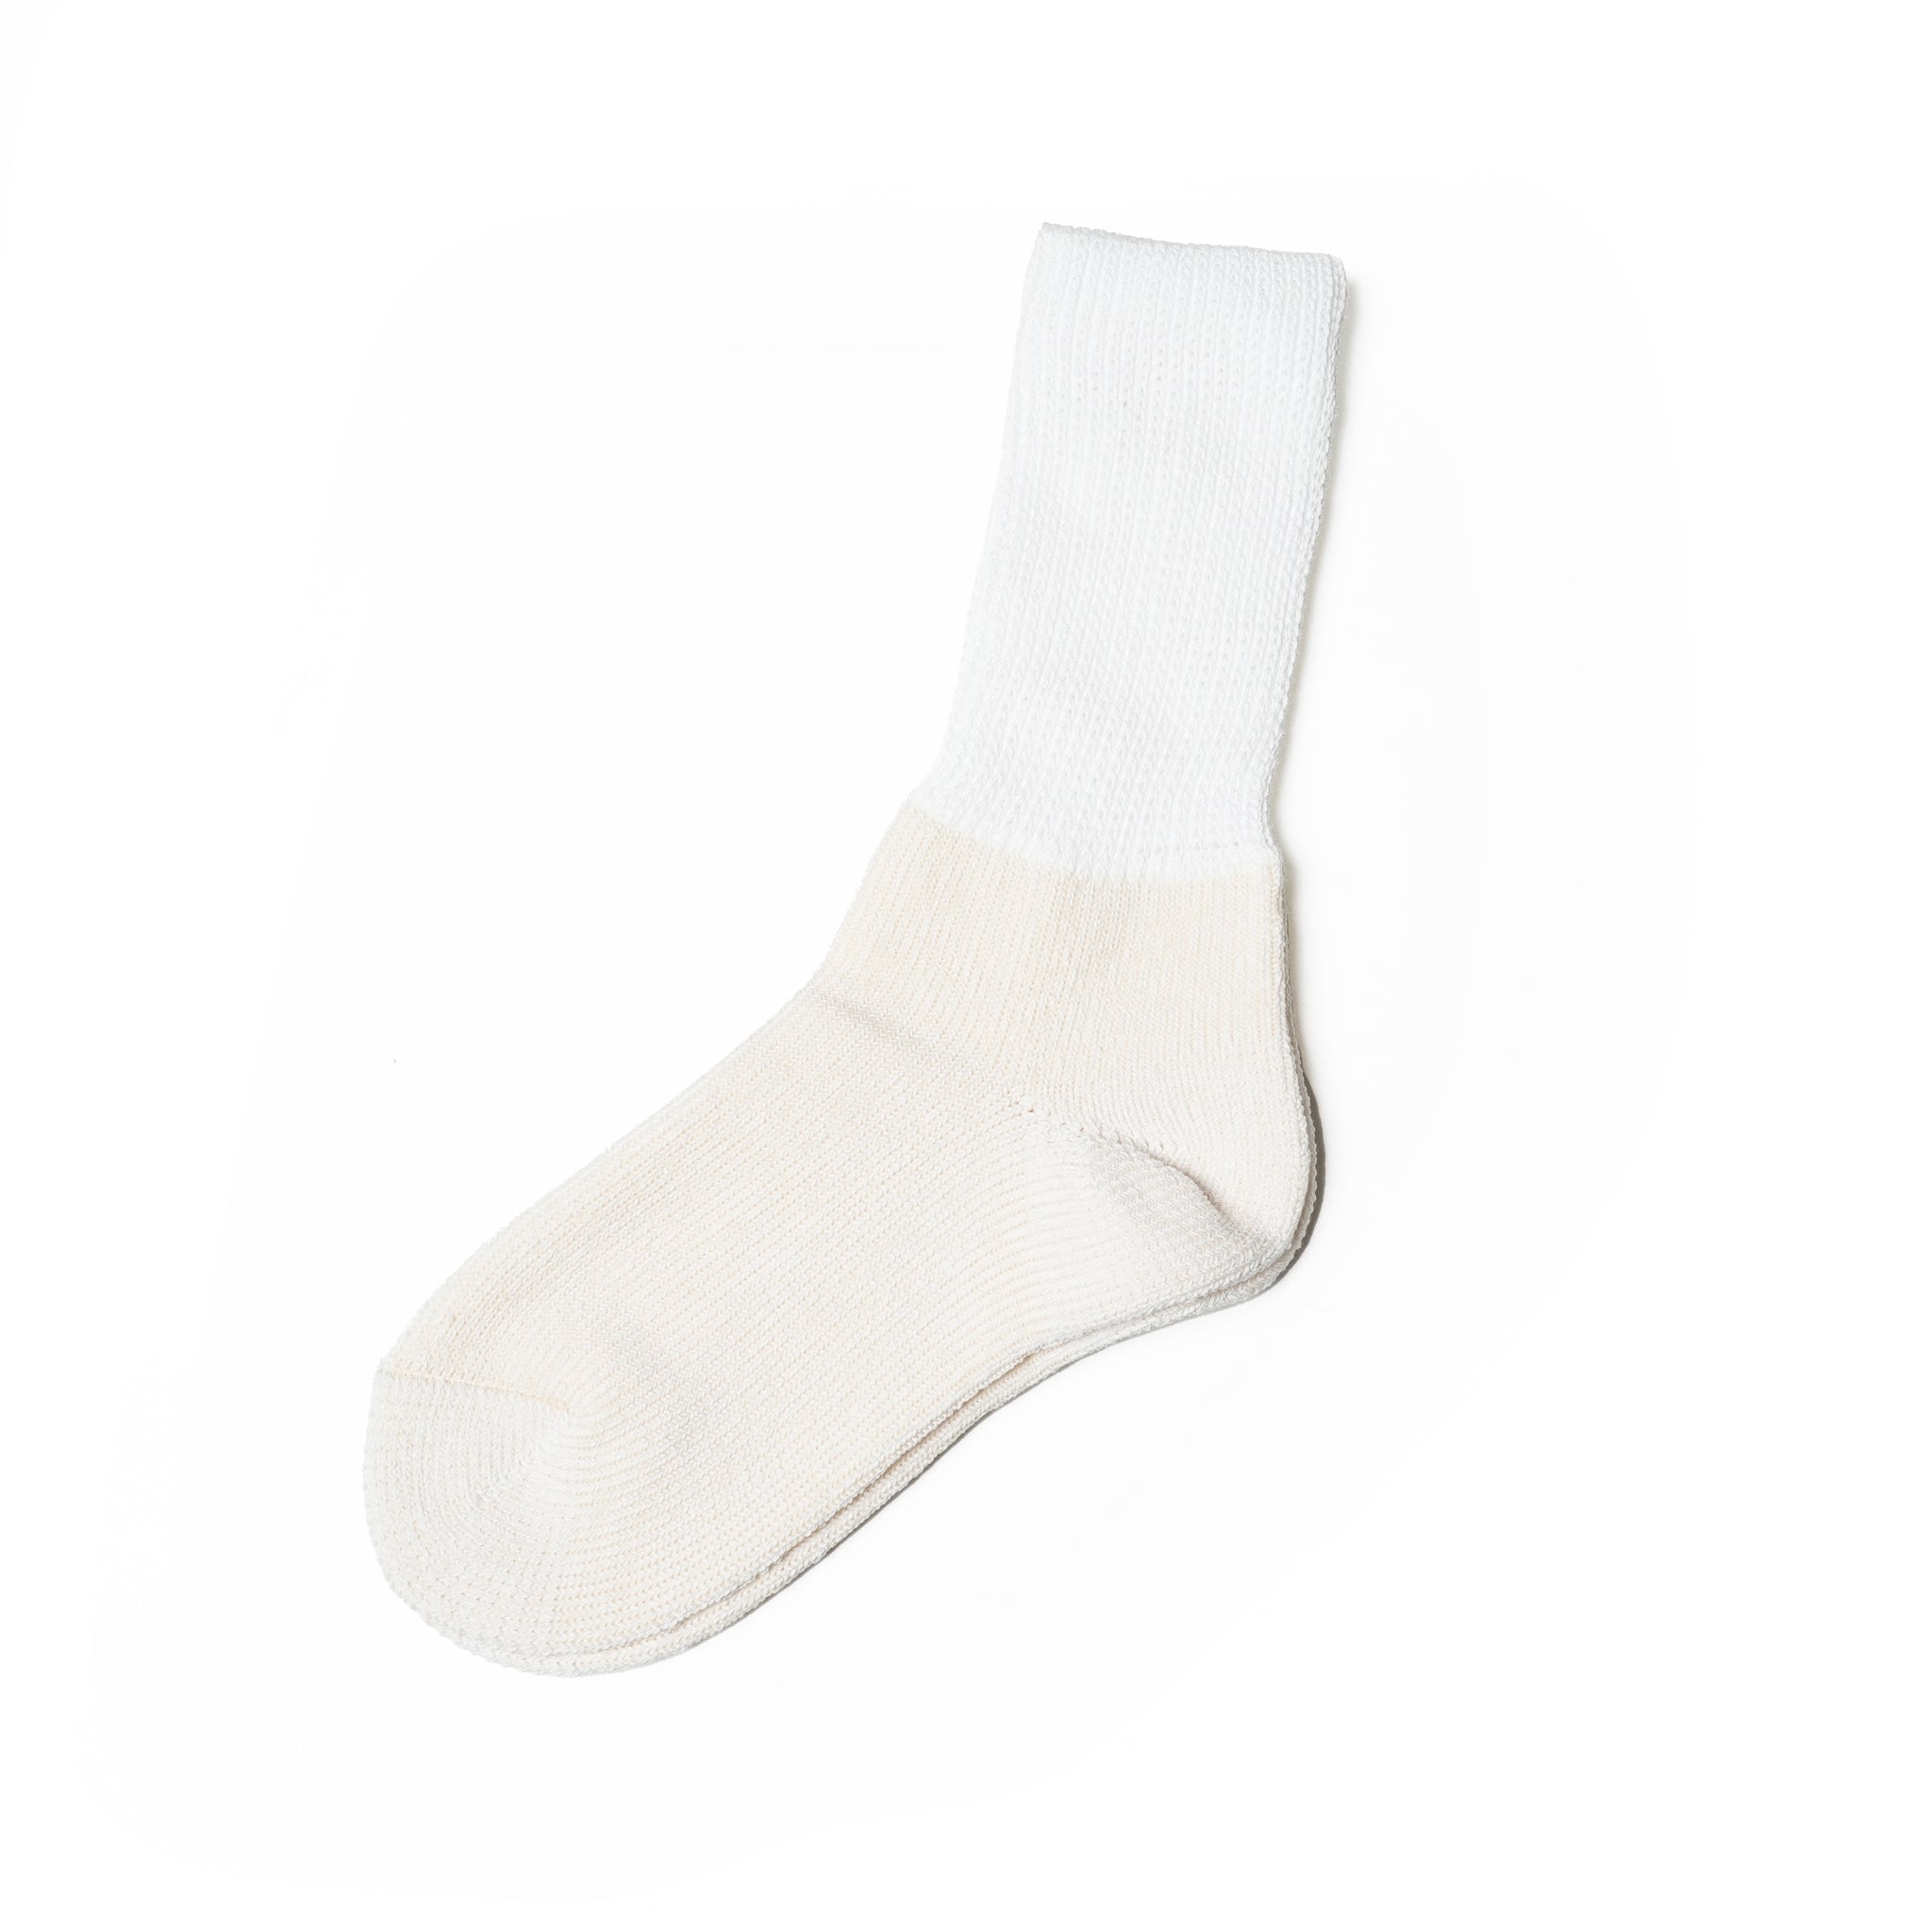 Name:CHUCK Socks| Color:Ecru/Gray/Red| Size:Free 【CATTA_カッタ】【ネコポス選択可能】